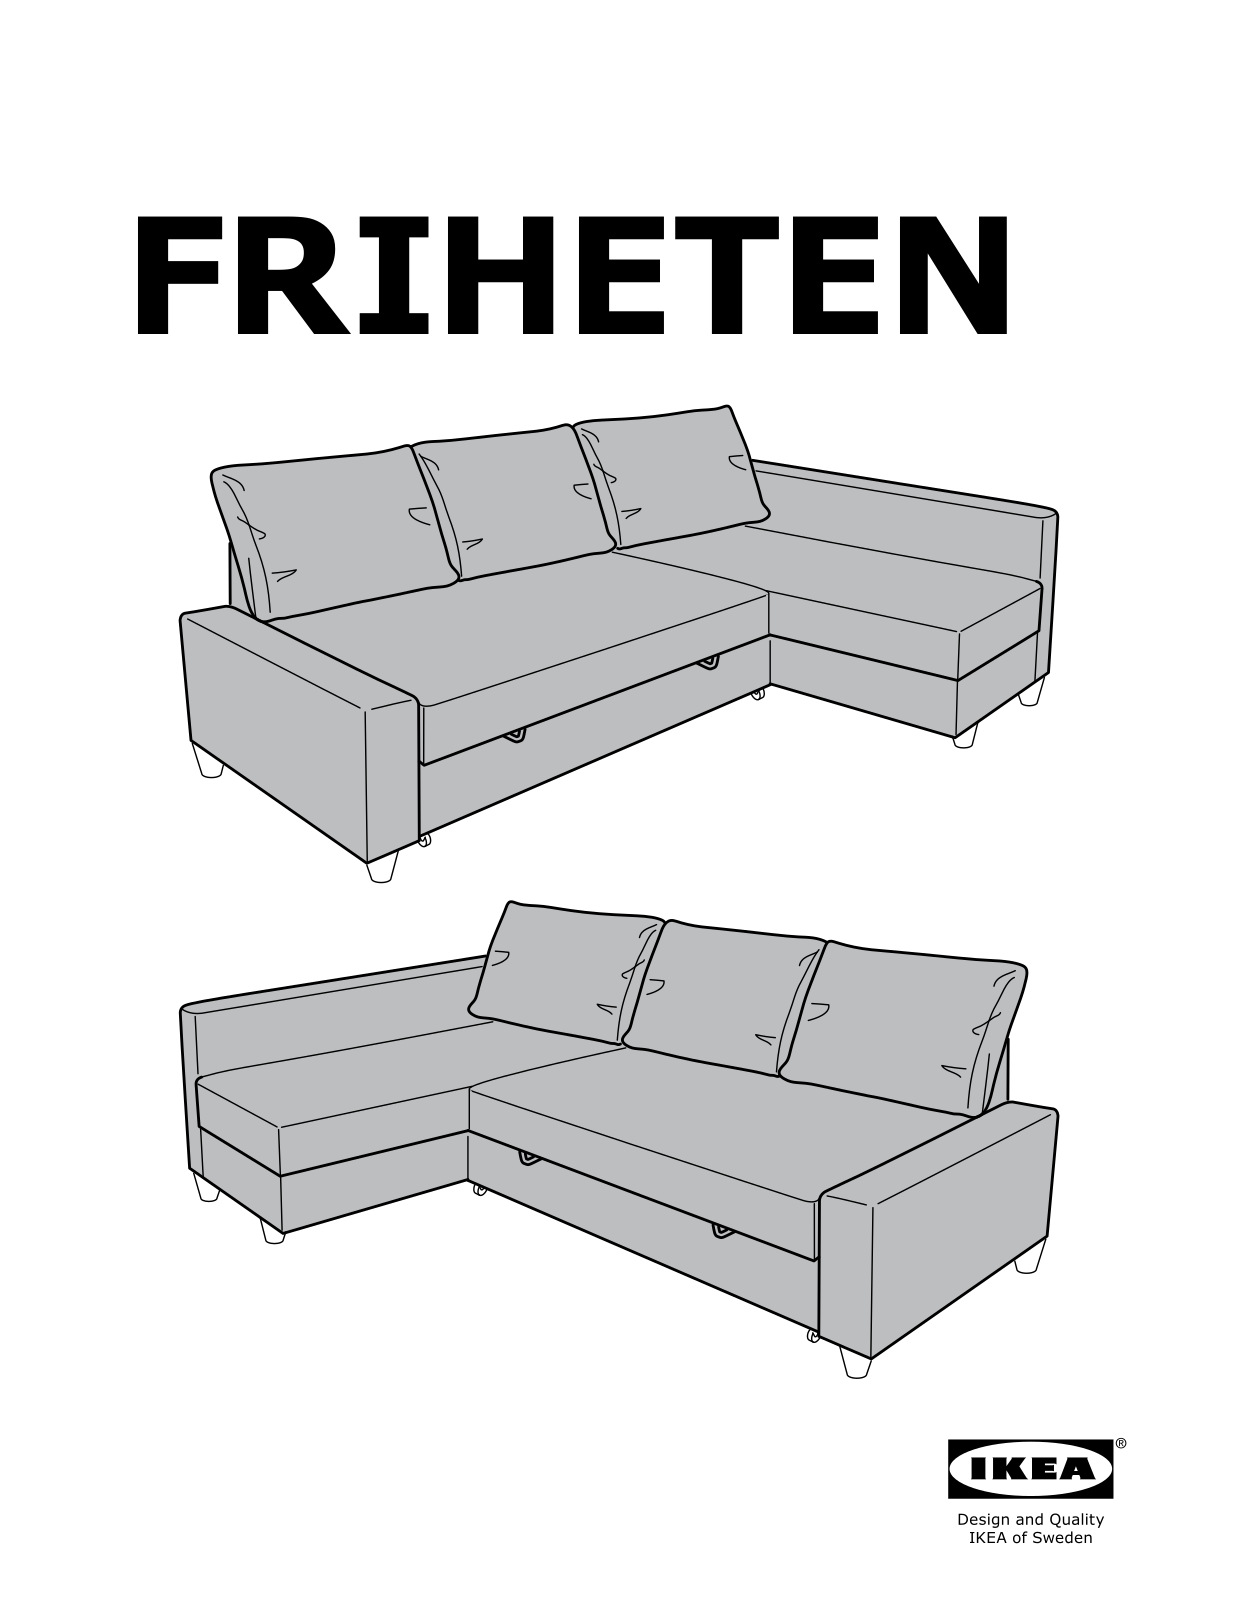 IKEA FRIHETEN Instruction Manual